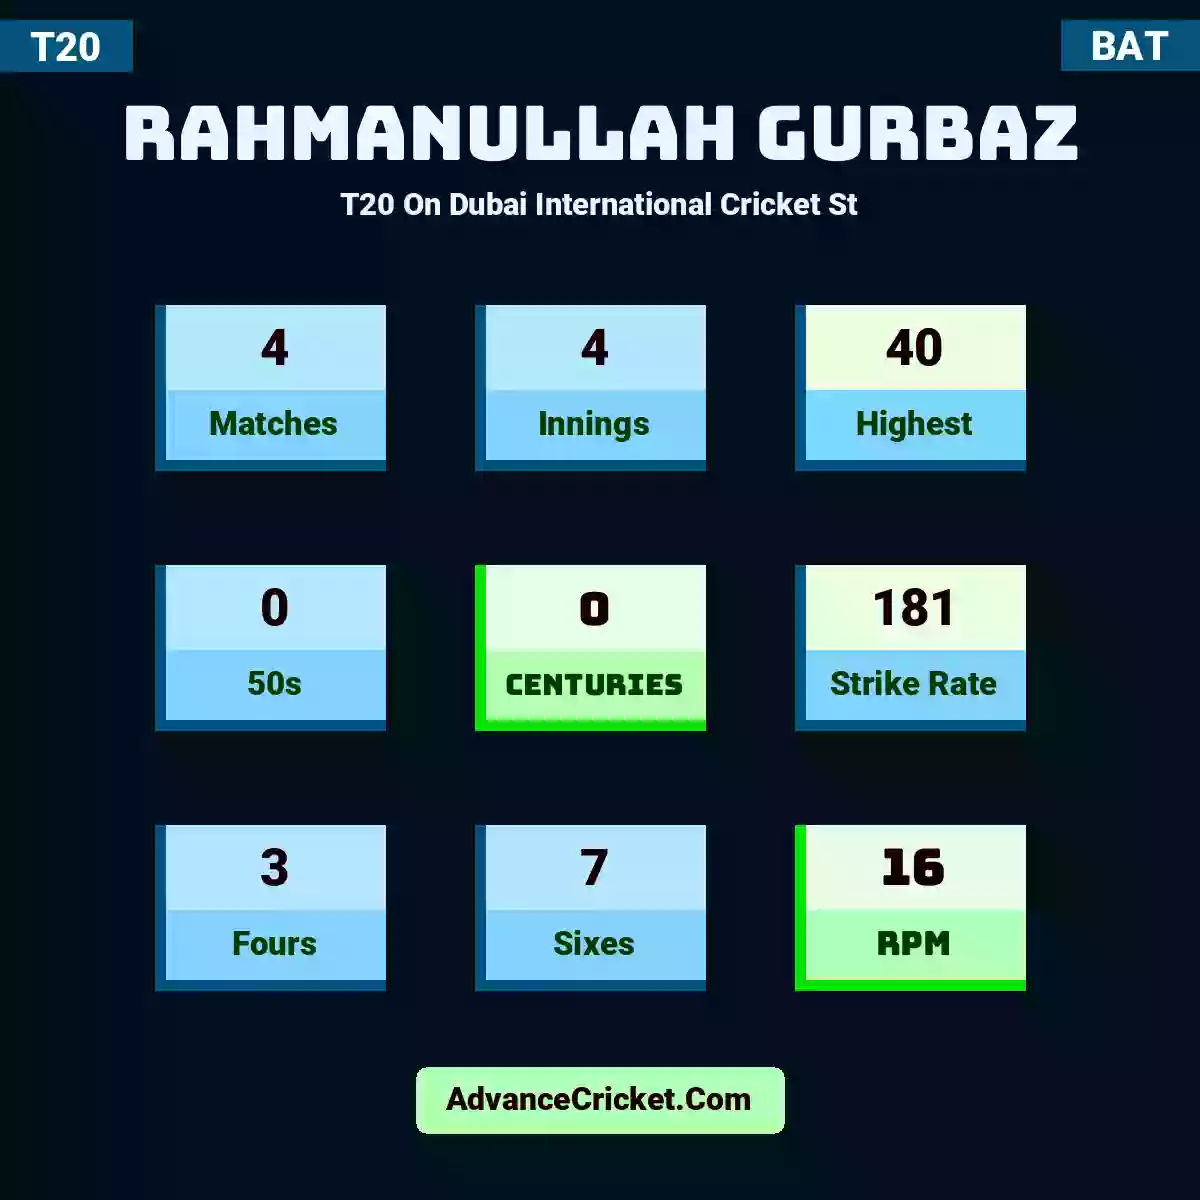 Rahmanullah Gurbaz T20  On Dubai International Cricket St, Rahmanullah Gurbaz played 4 matches, scored 40 runs as highest, 0 half-centuries, and 0 centuries, with a strike rate of 181. R.Gurbaz hit 3 fours and 7 sixes, with an RPM of 16.